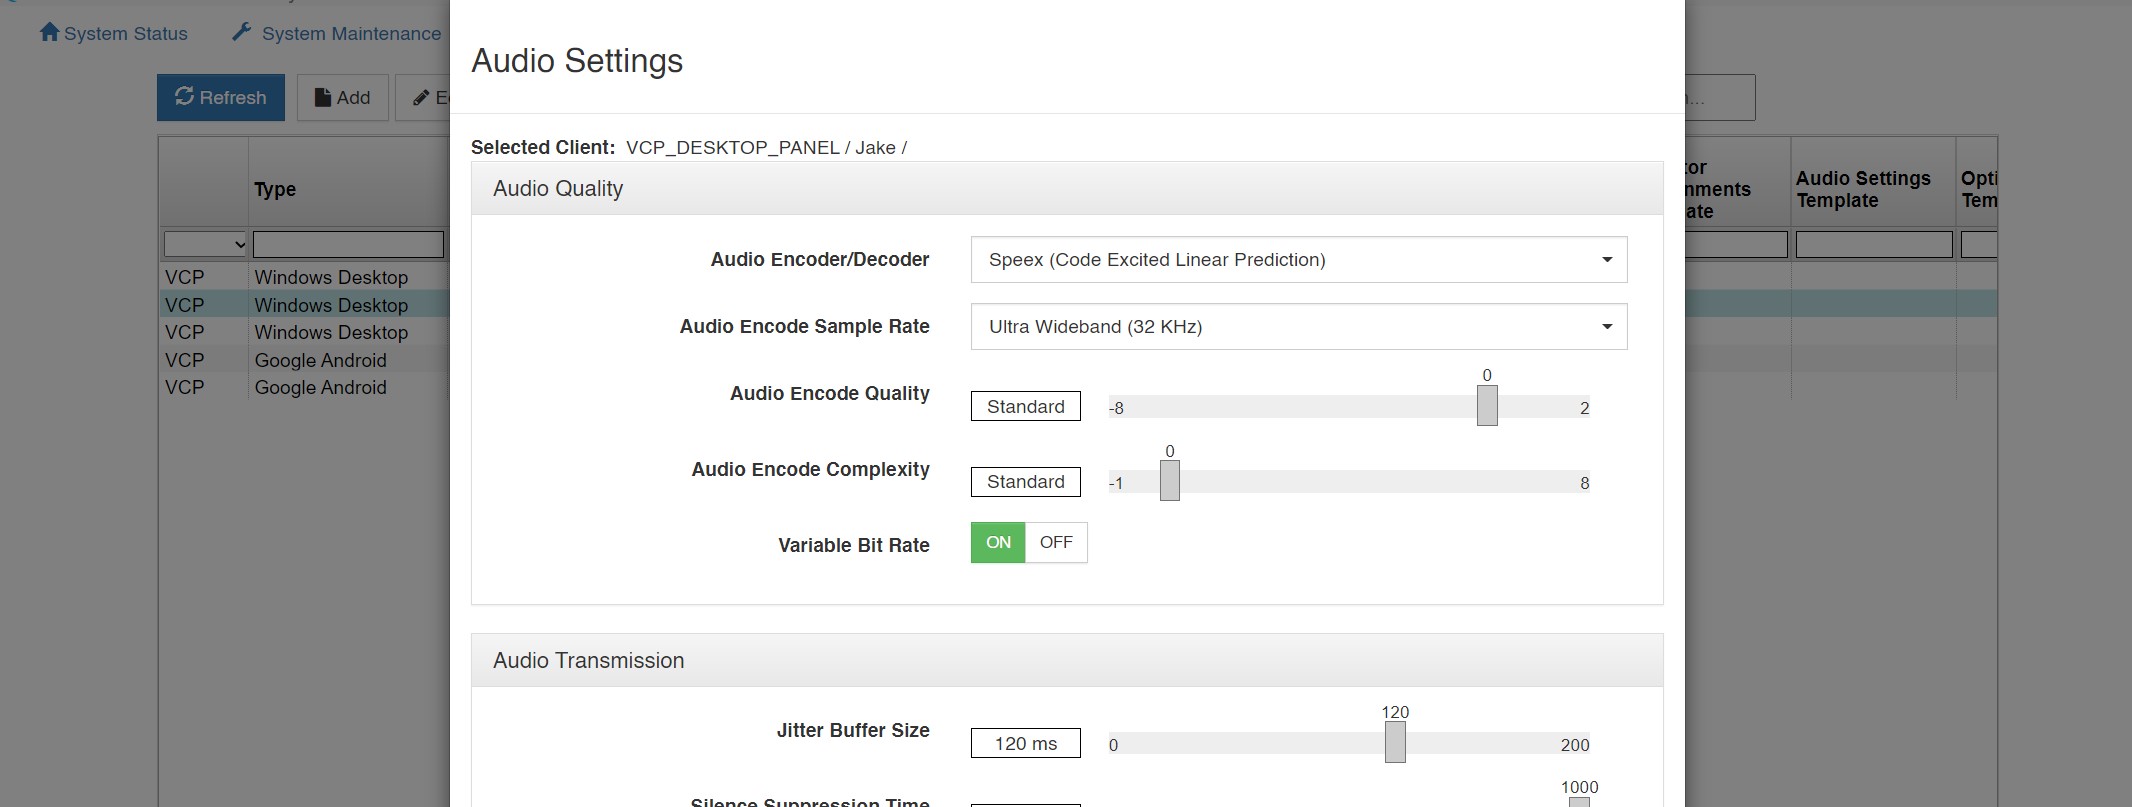 screenshot of vcom system administration client audio settings menu